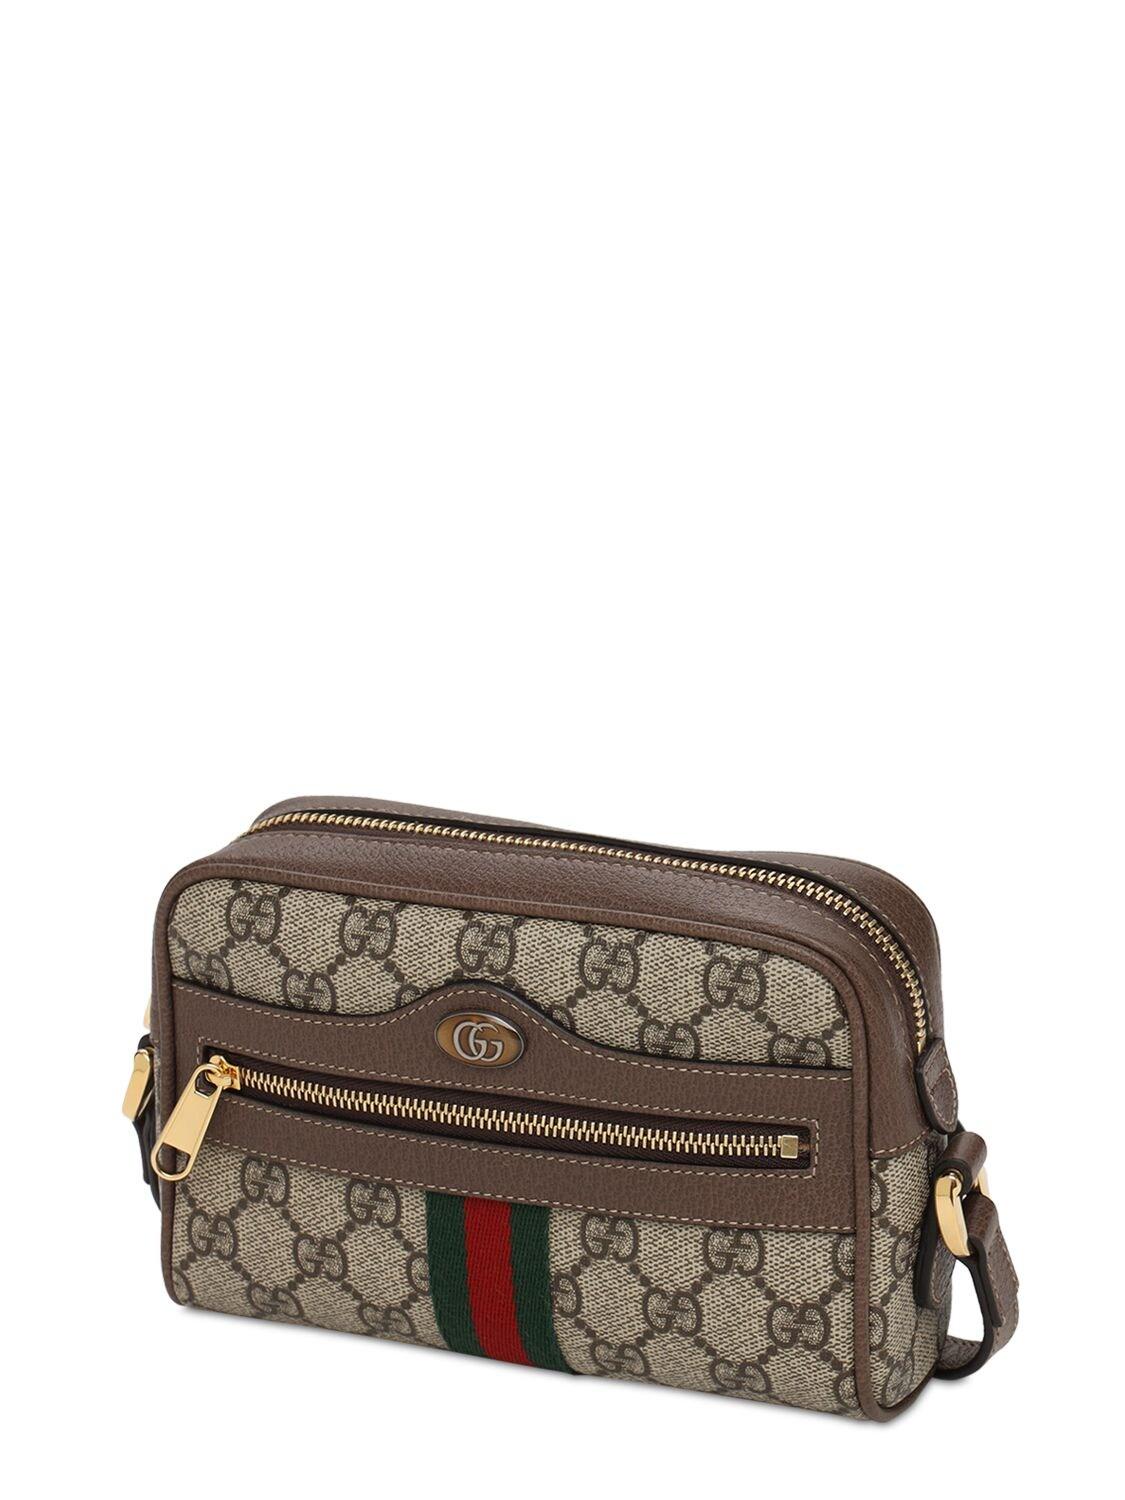 Gucci Canvas Ophidia GG Supreme Mini Bag in Beige (Brown) - Save 